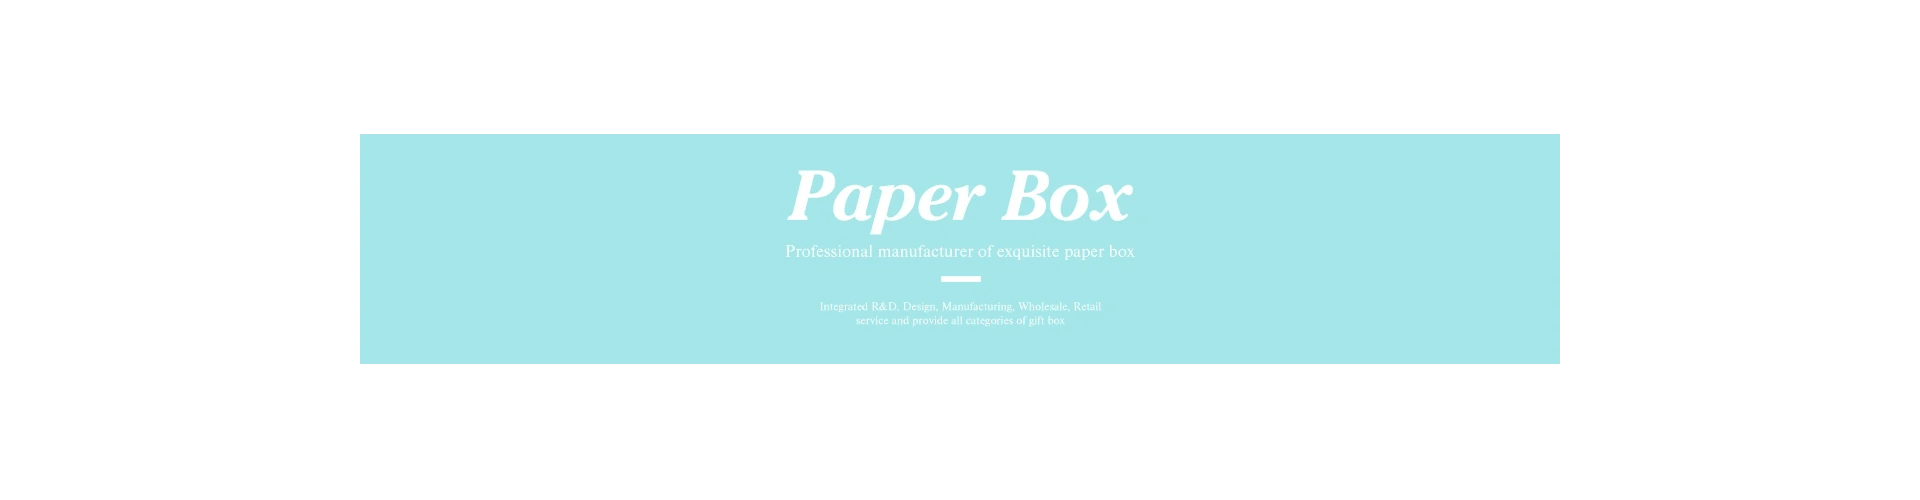 Weihong Paper And Printing Co., Ltd. - Paper Box, Cake Box